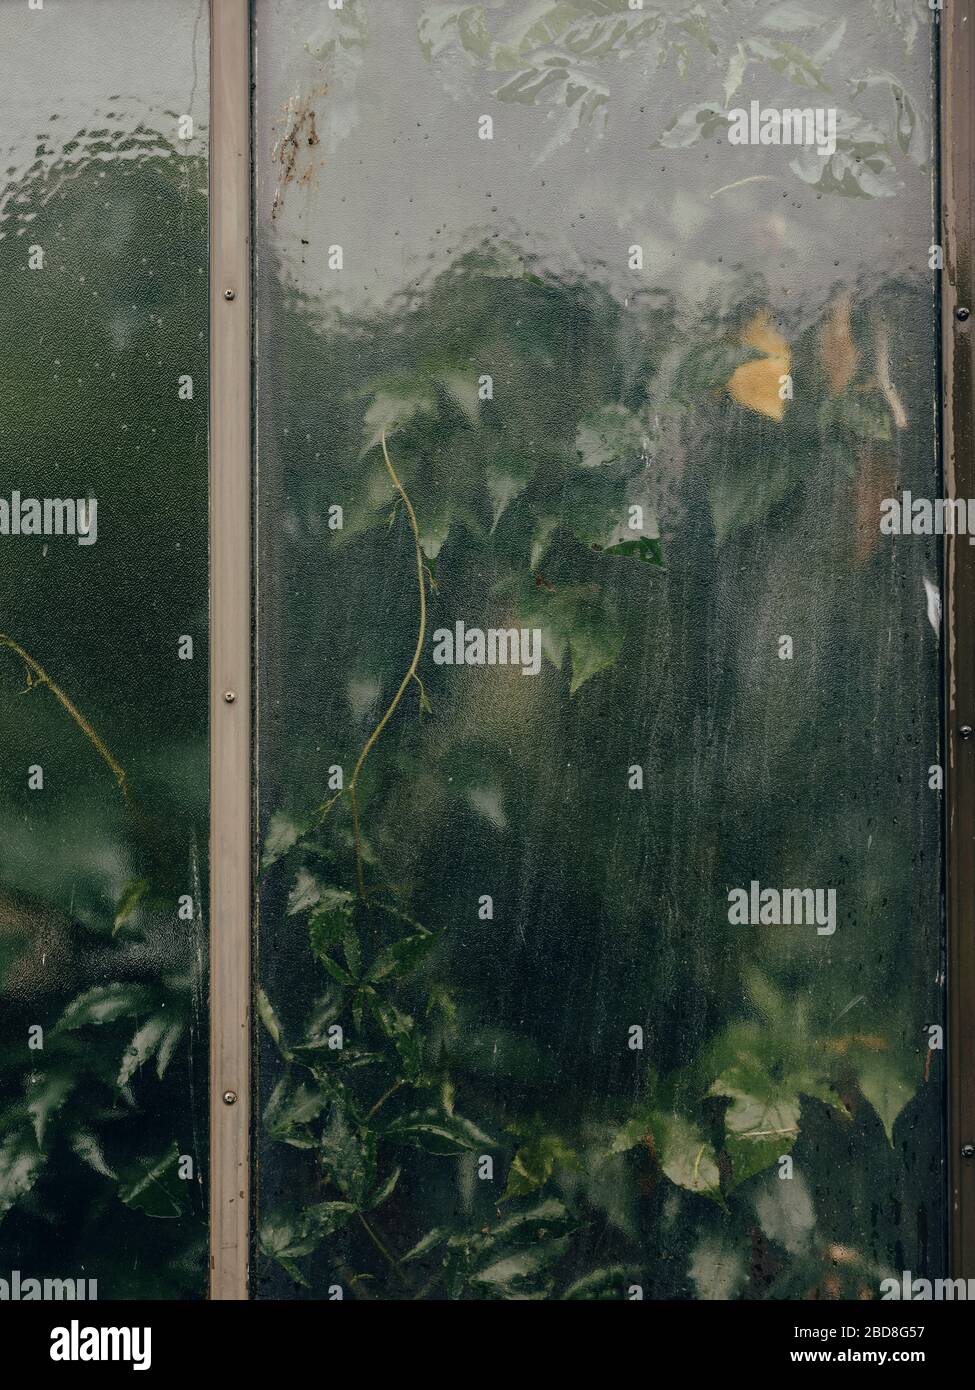 Vine plant behind glass window Stock Photo